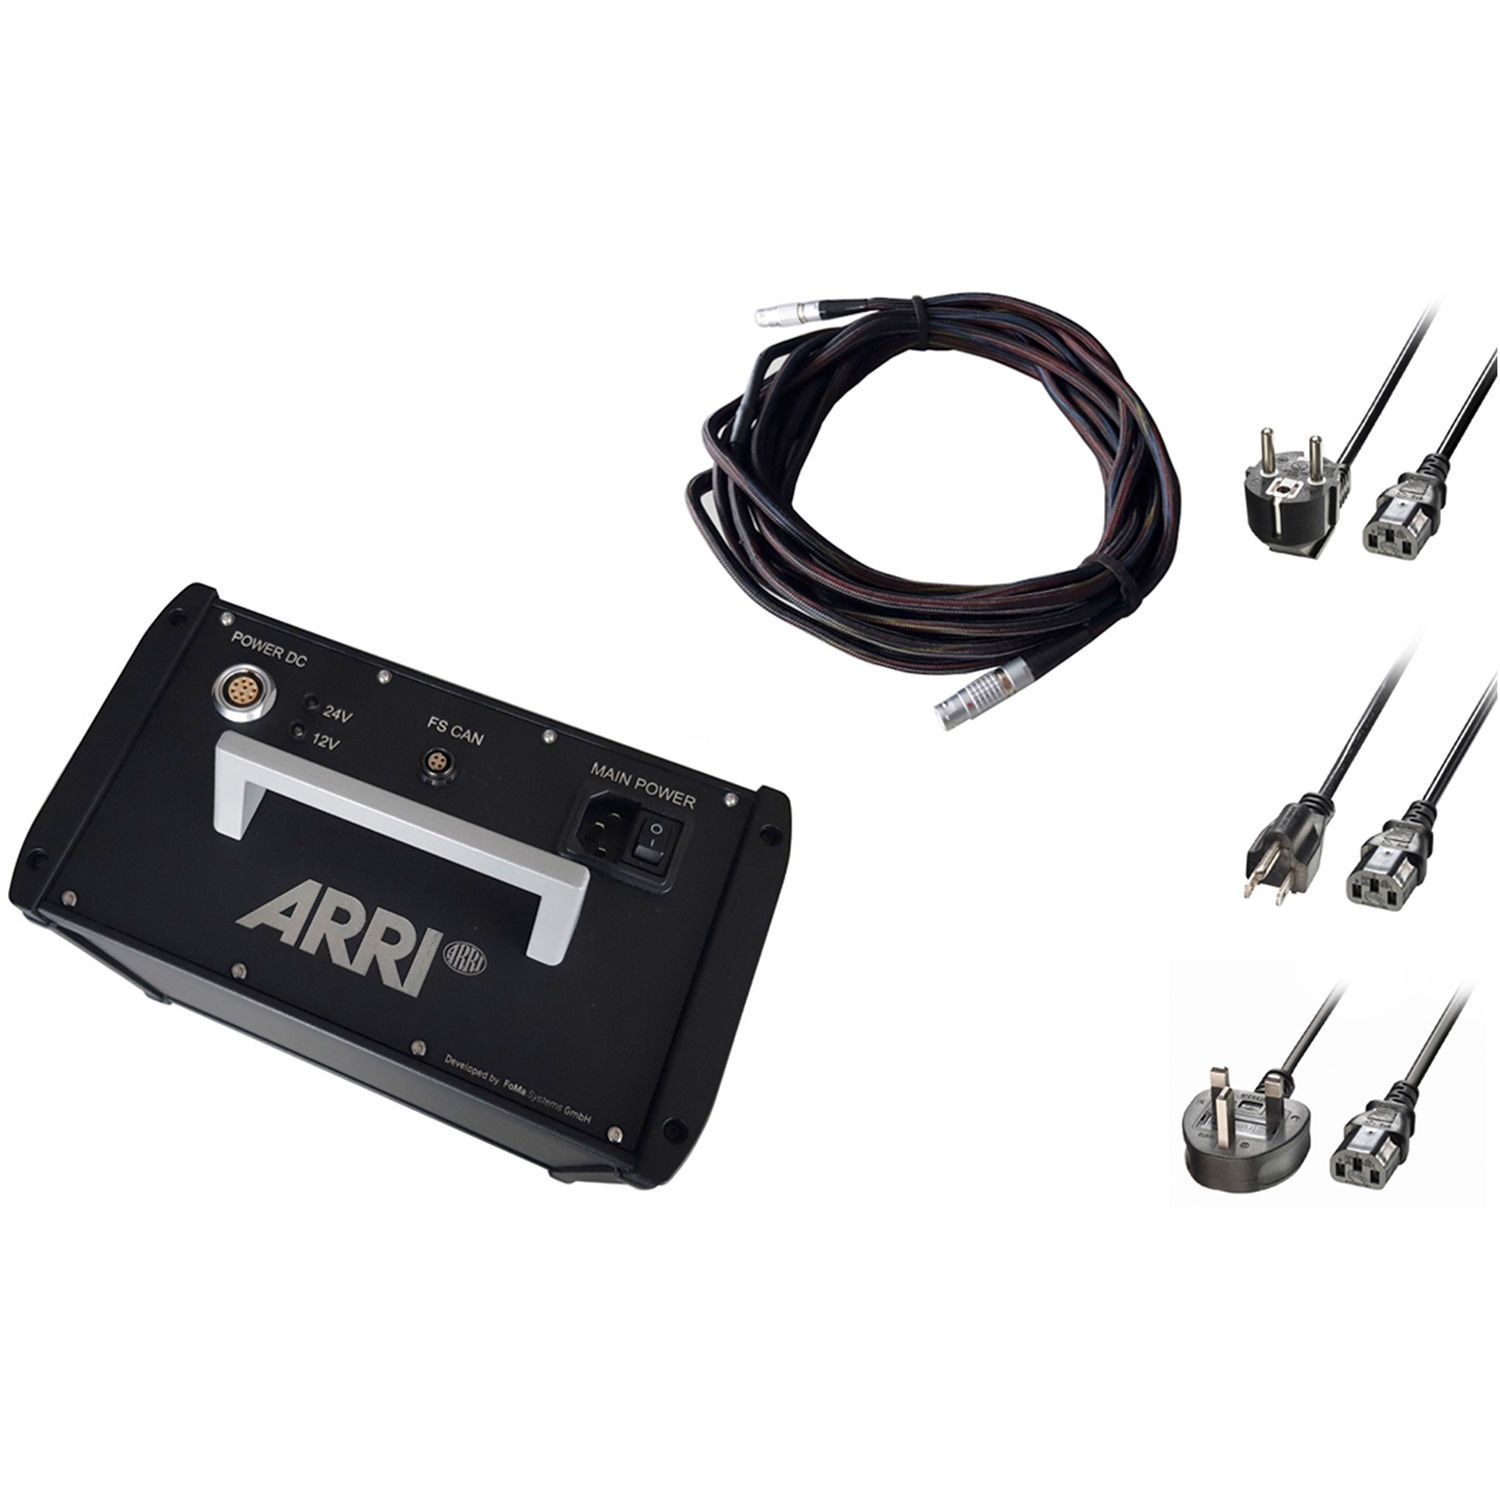 ARRI - Kit d'alimentation SRH-3 600W